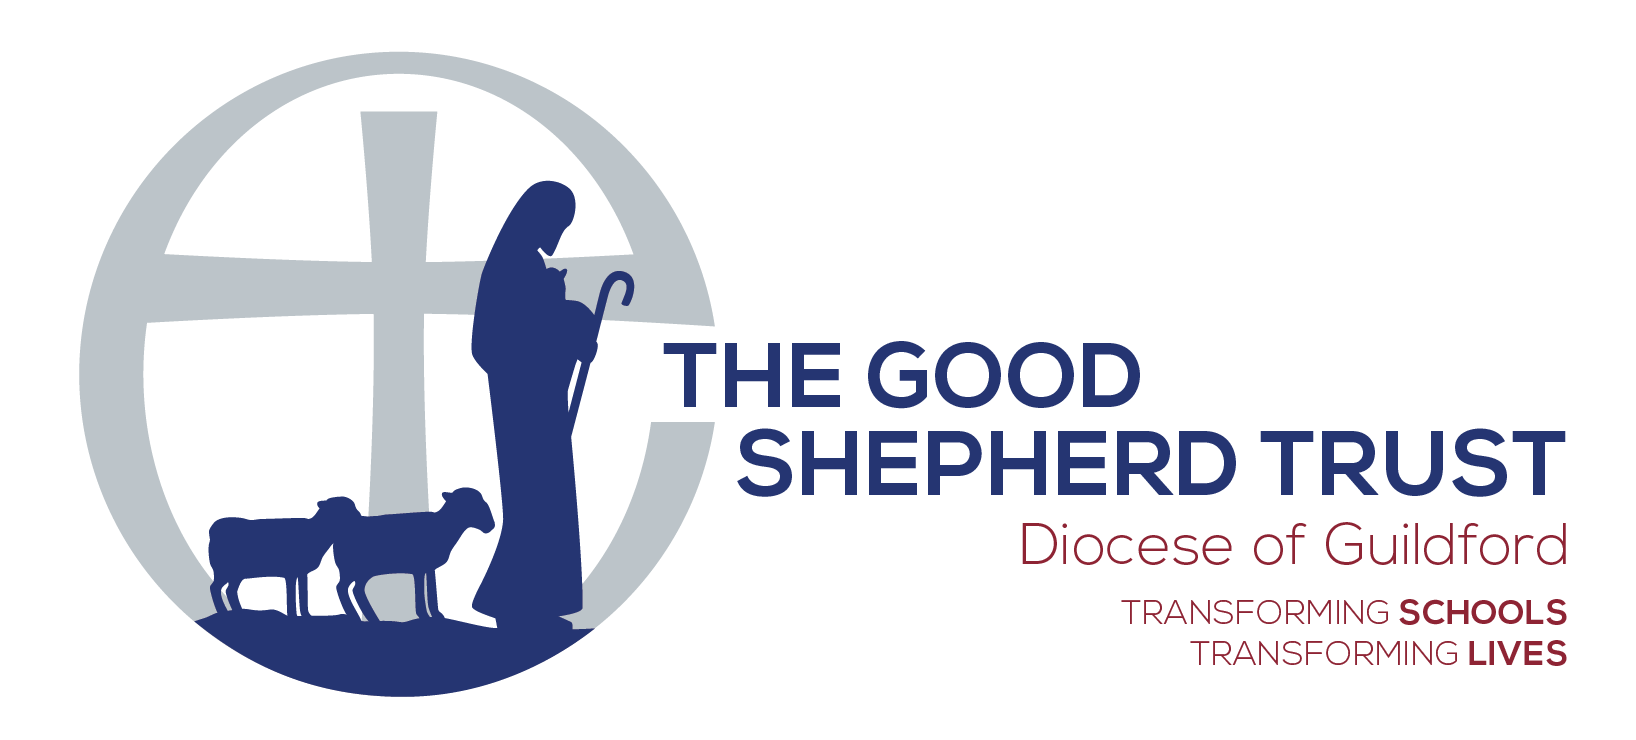 The Good Shepherd Trust